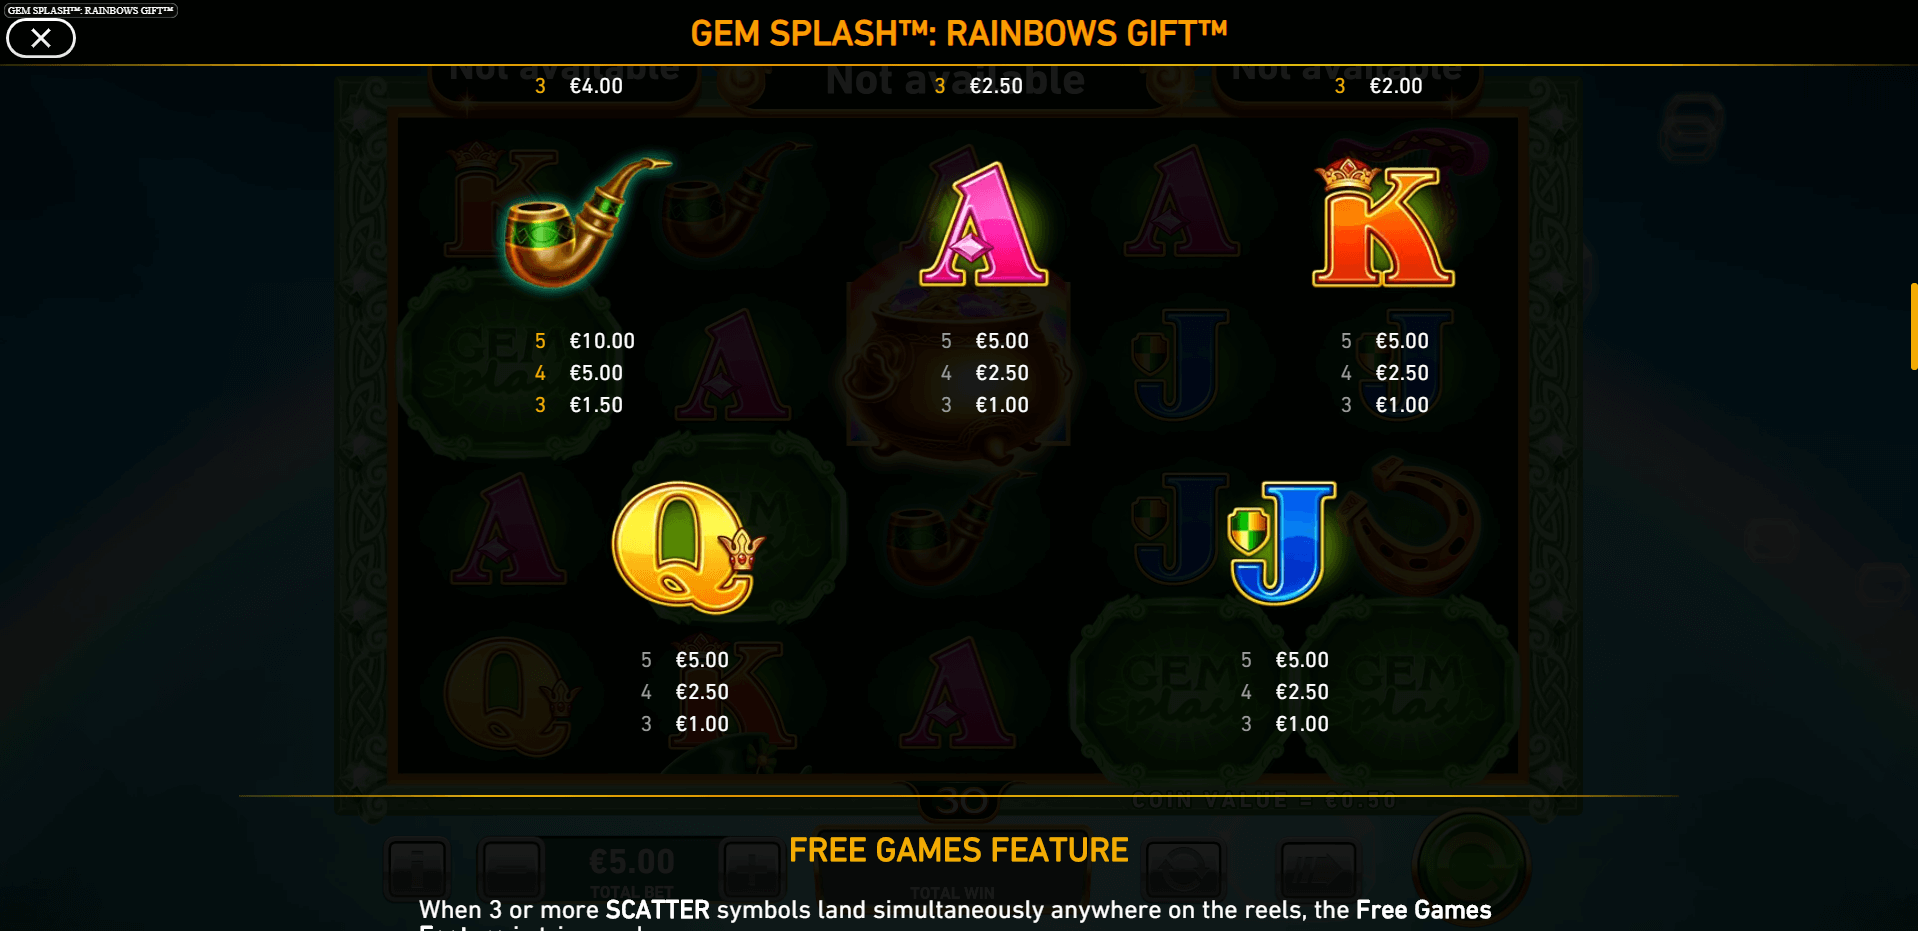 gem splash rainbows gift slot machine detail image 2